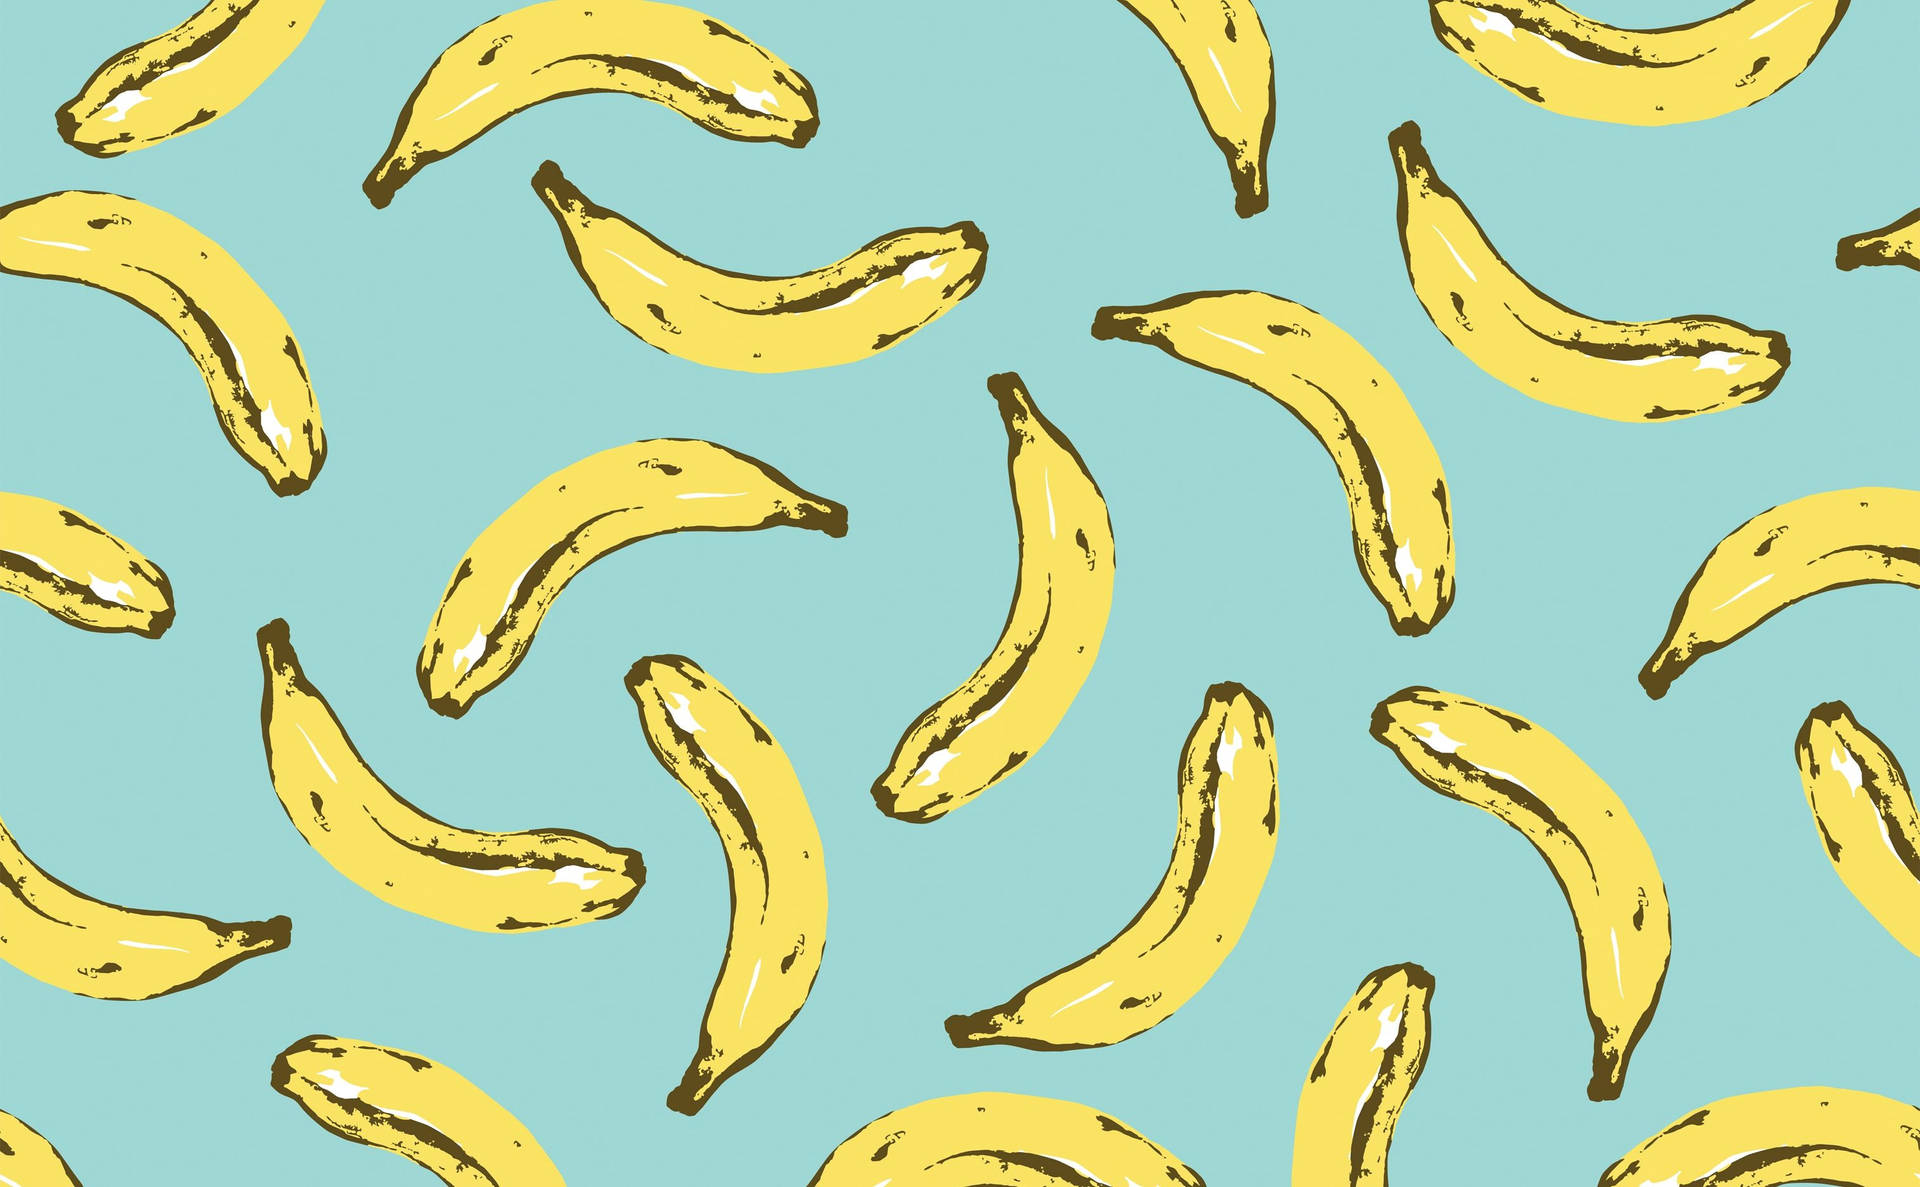 Scattered Bananas On Teal Background